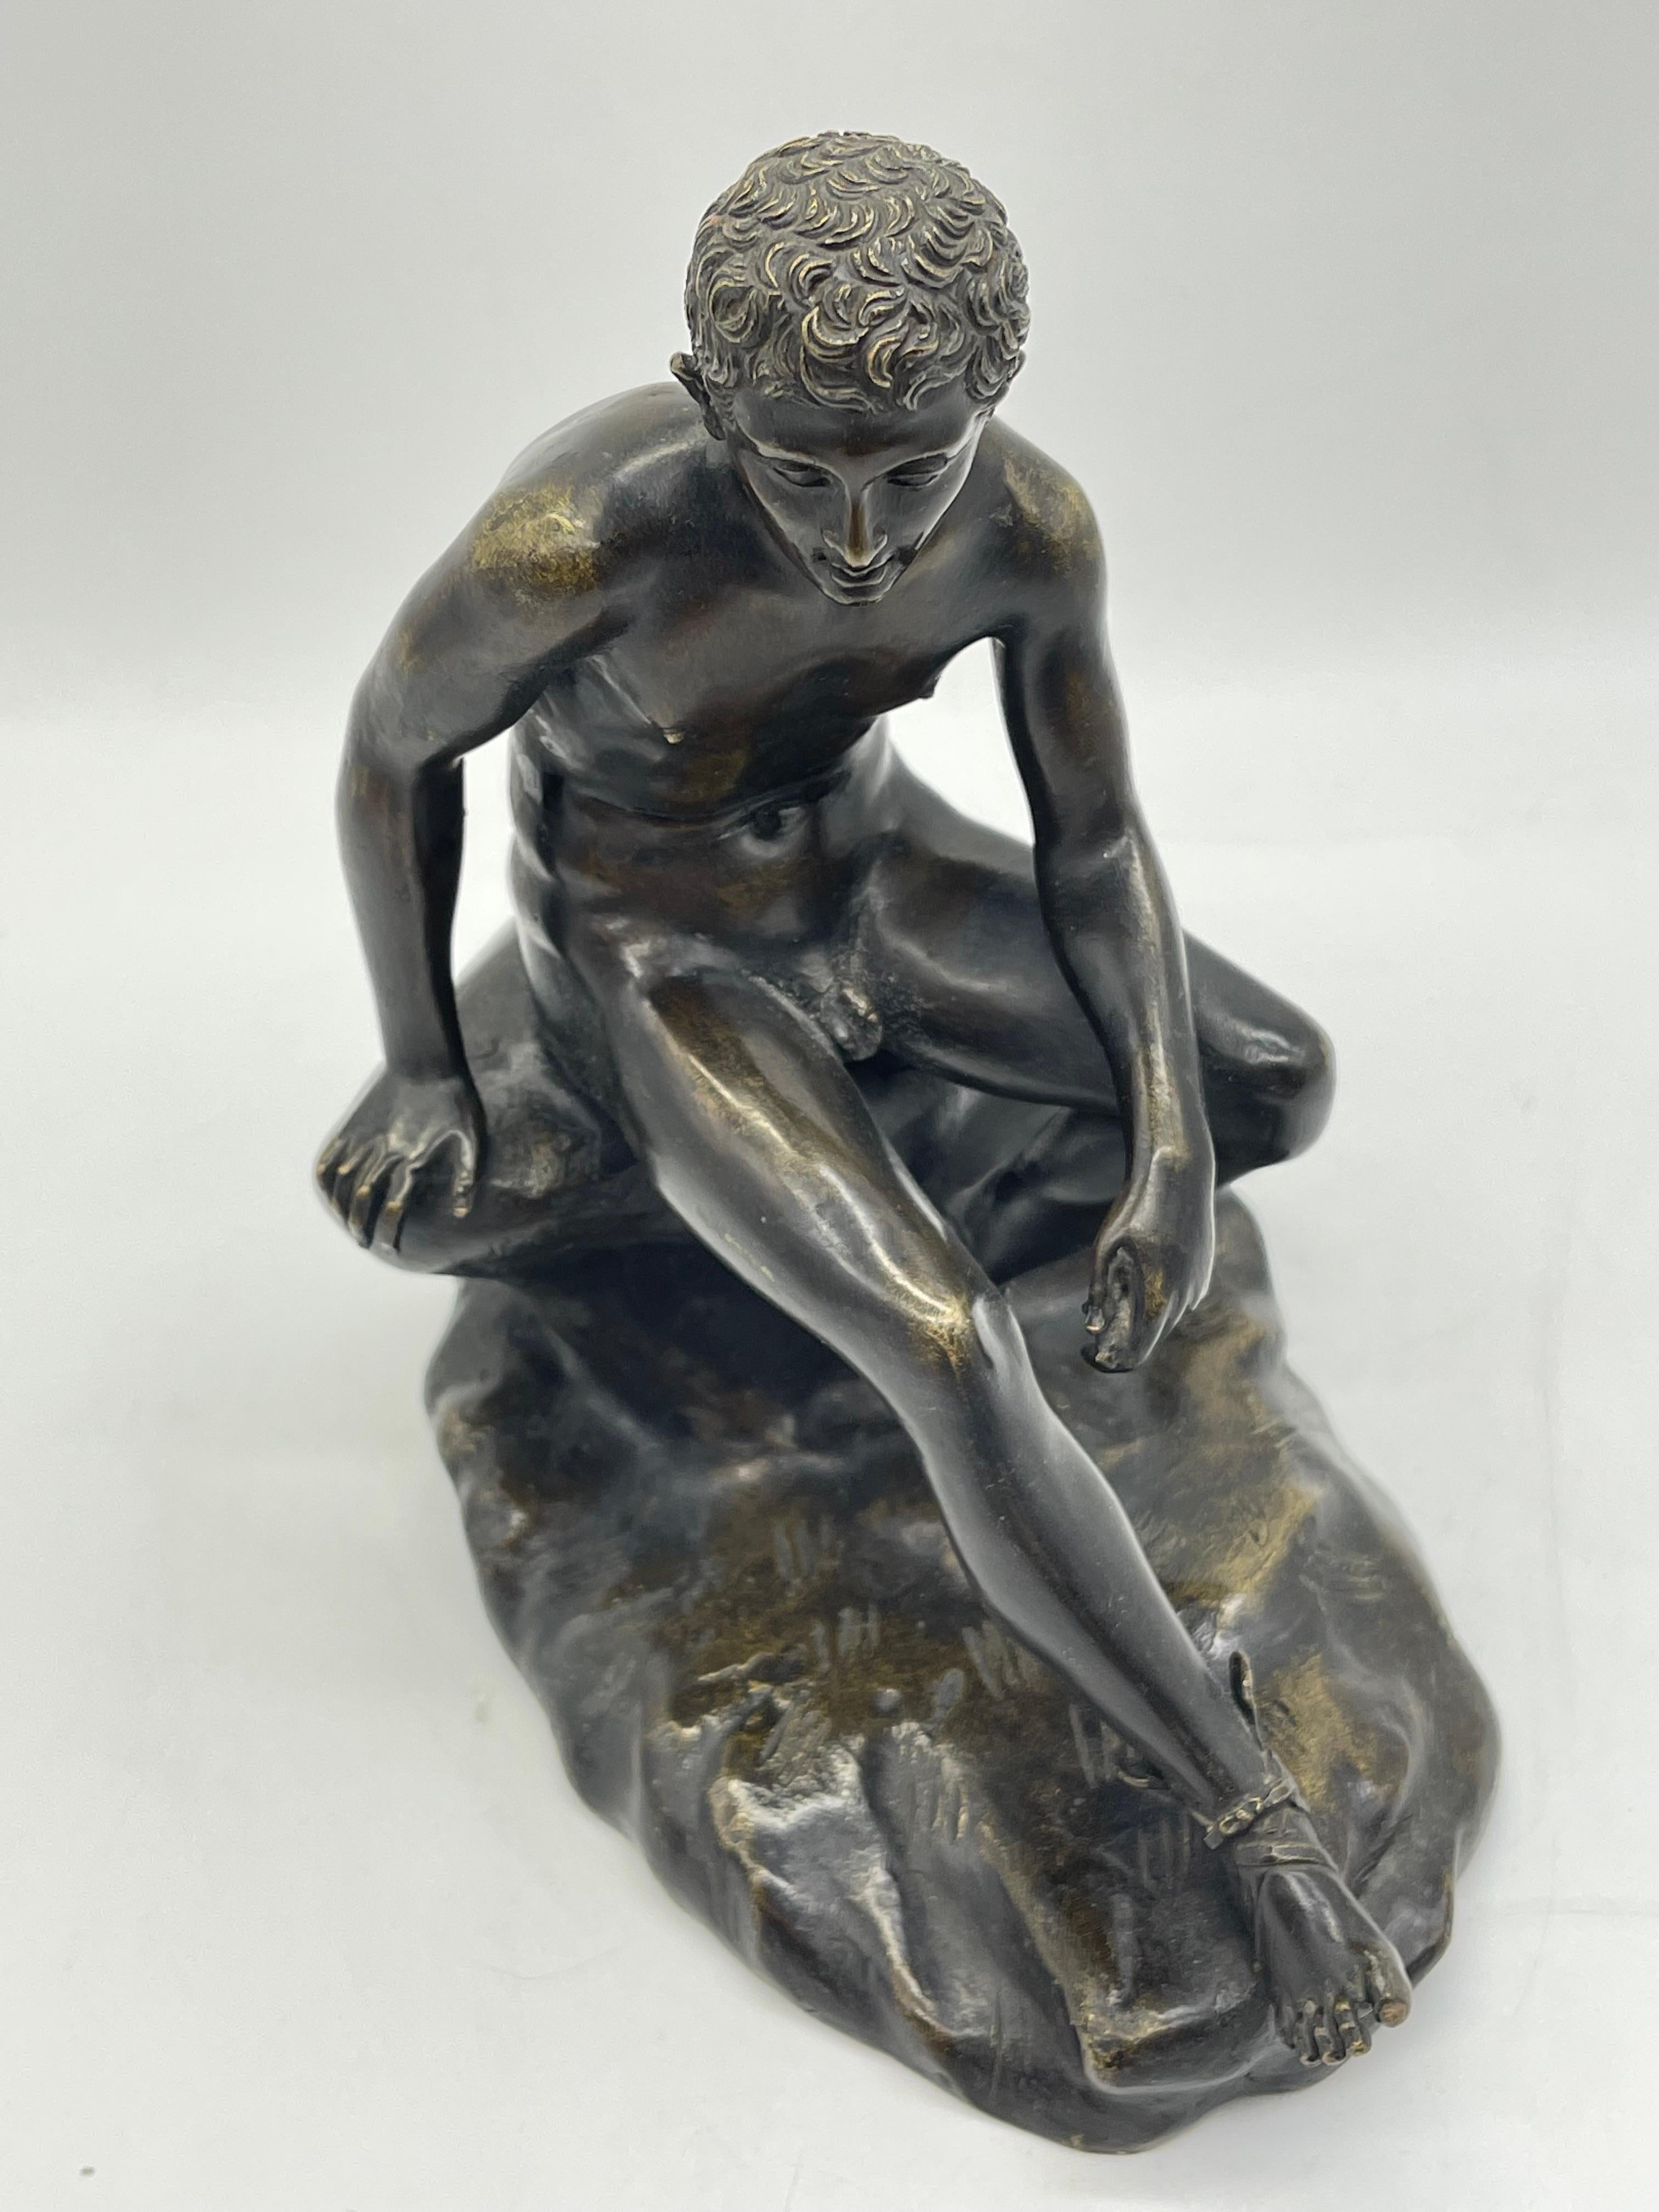 Seated athletic bronze sculpture / Figure Greek - Roman mythology For Sale 4